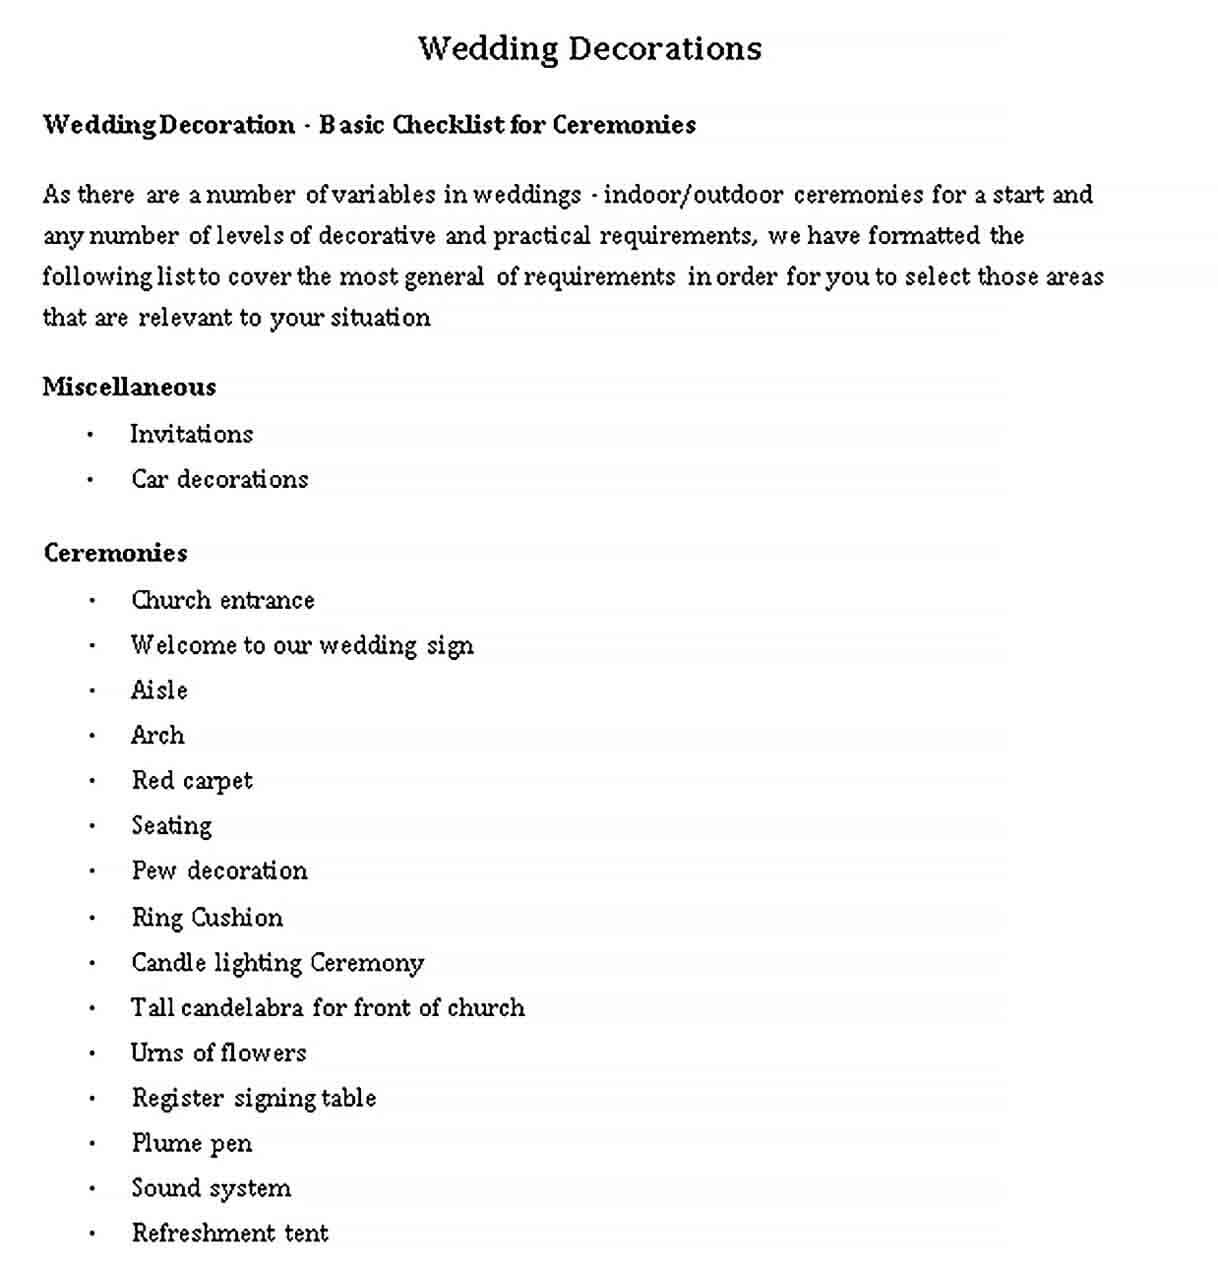 Sample Wedding Decor Checklist